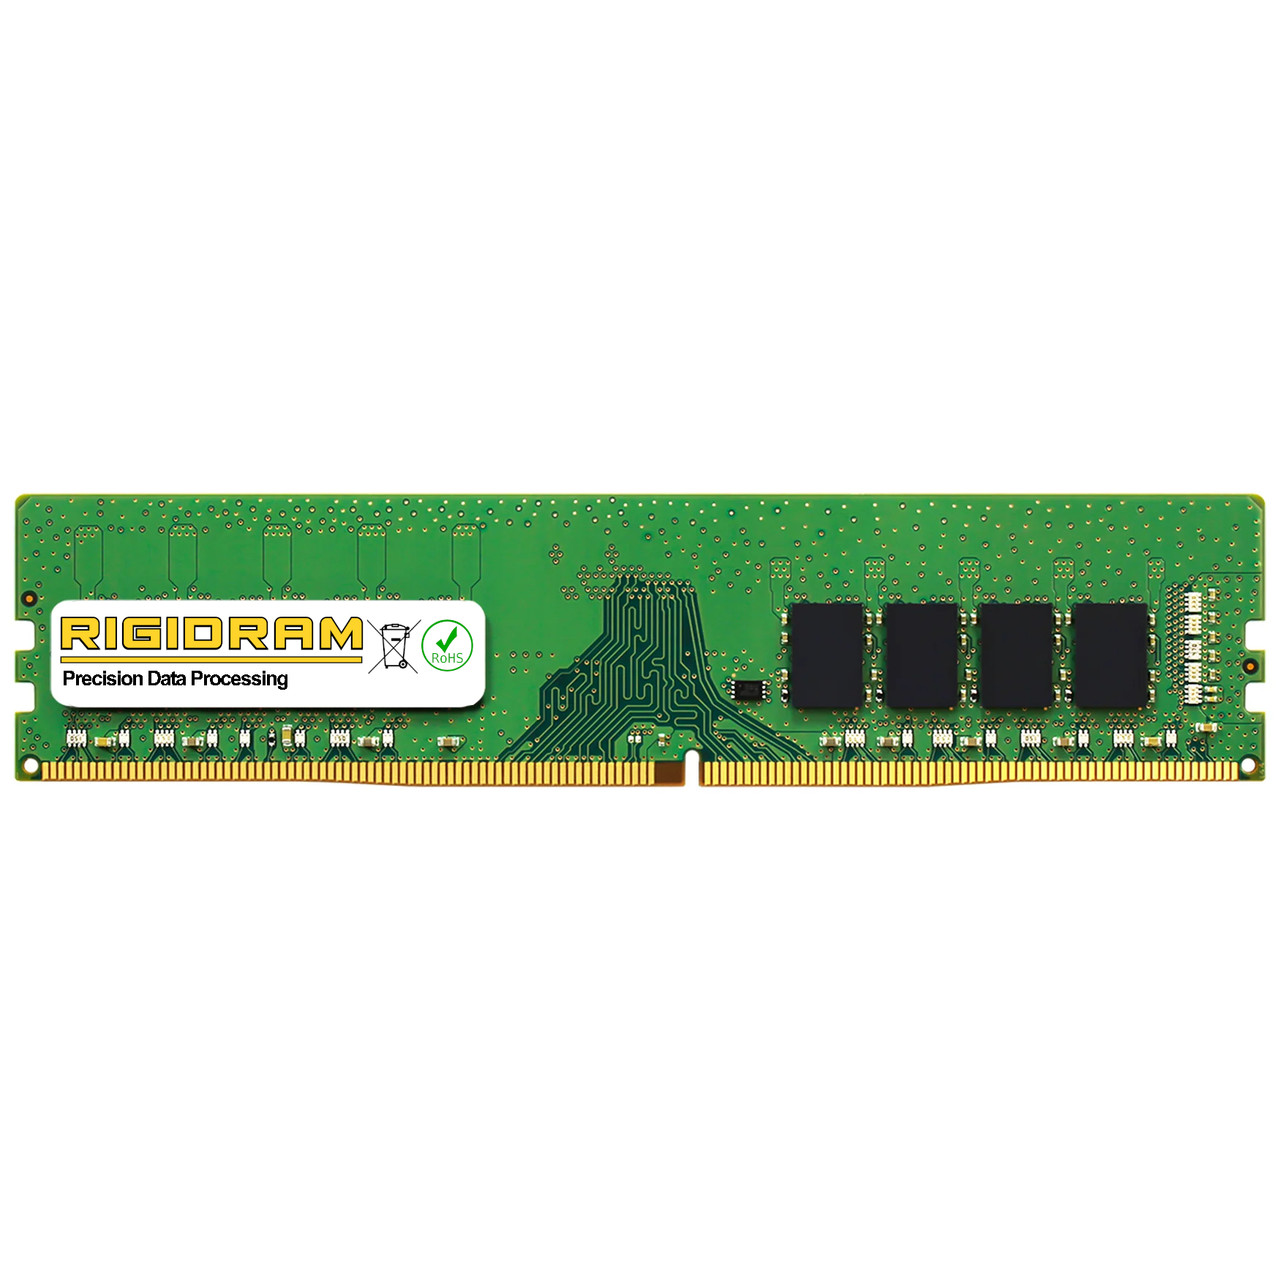 eBay*8GB Dell Vostro 3268 DDR4 2400MHz UDIMM Memory RAM Upgrade